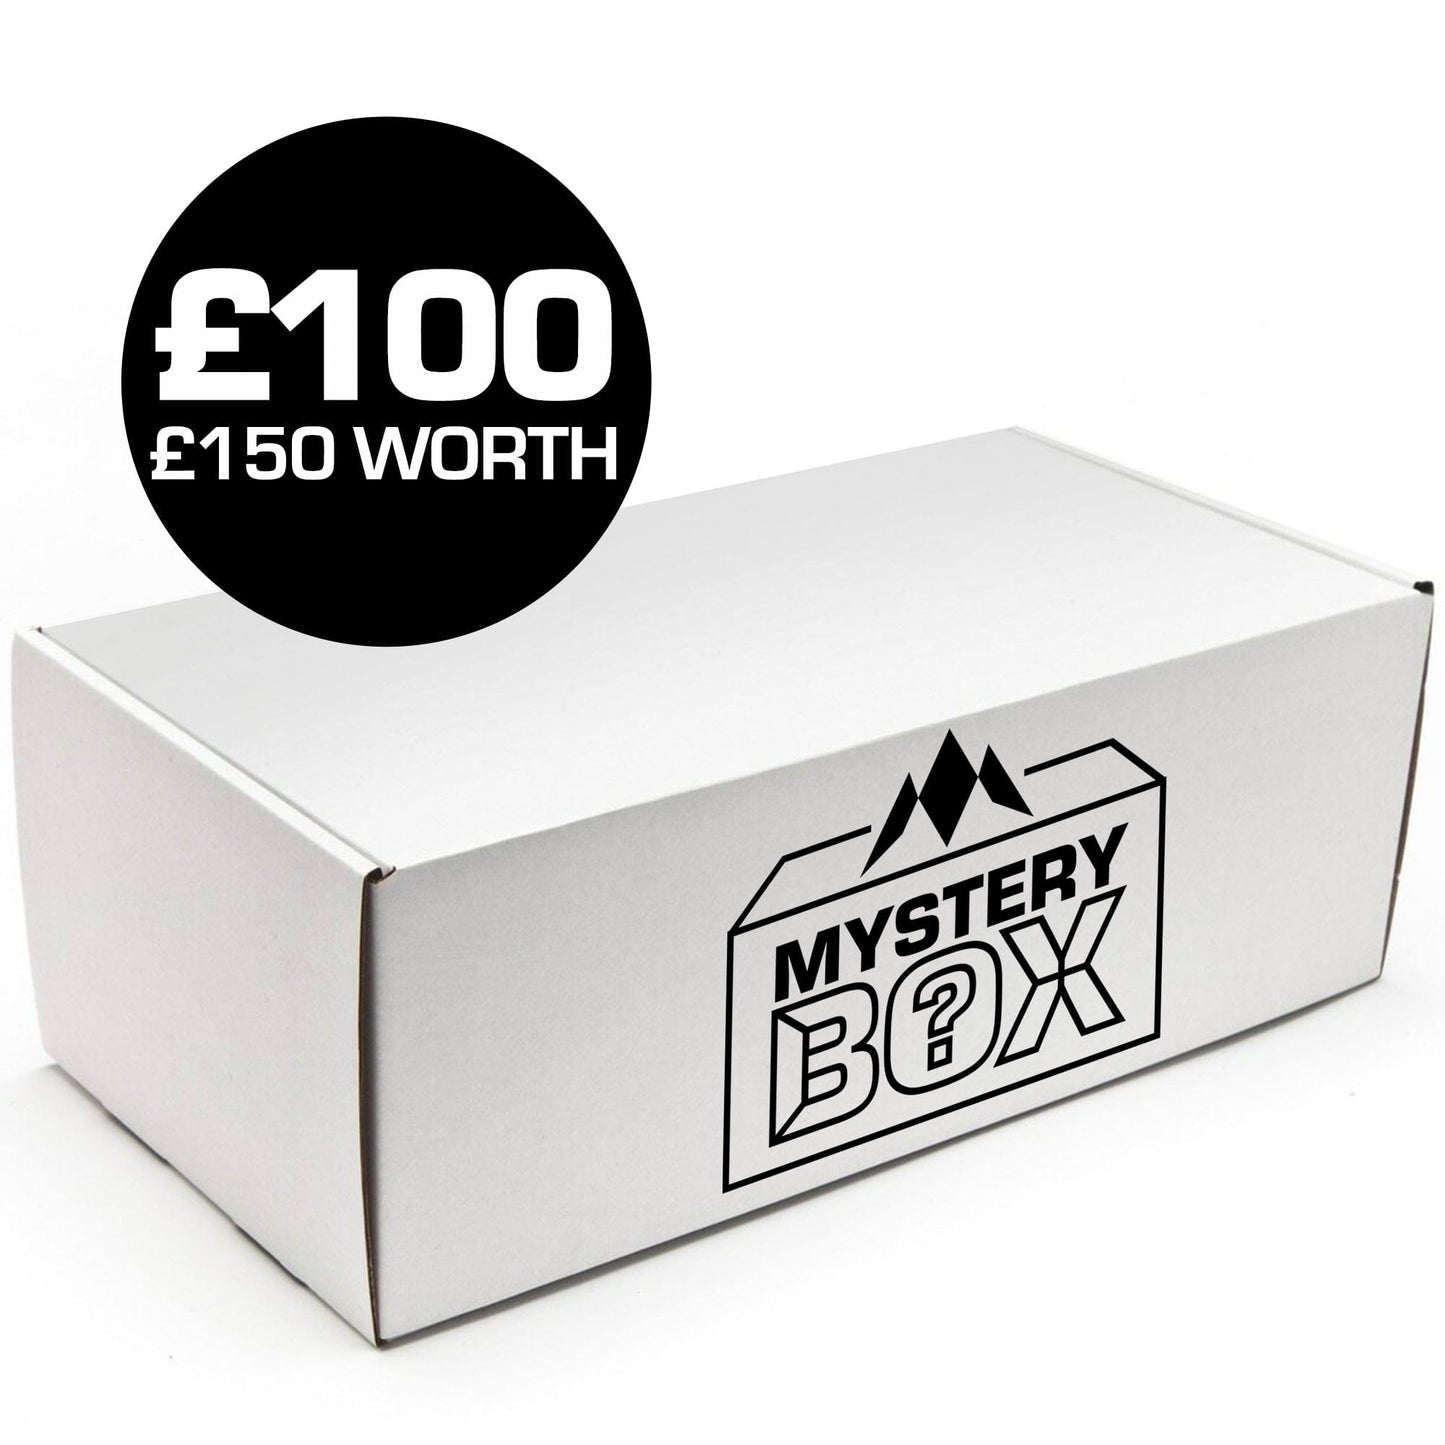 Mission Mystery Box - Soft Tip Darts & Accessories - Worth £150